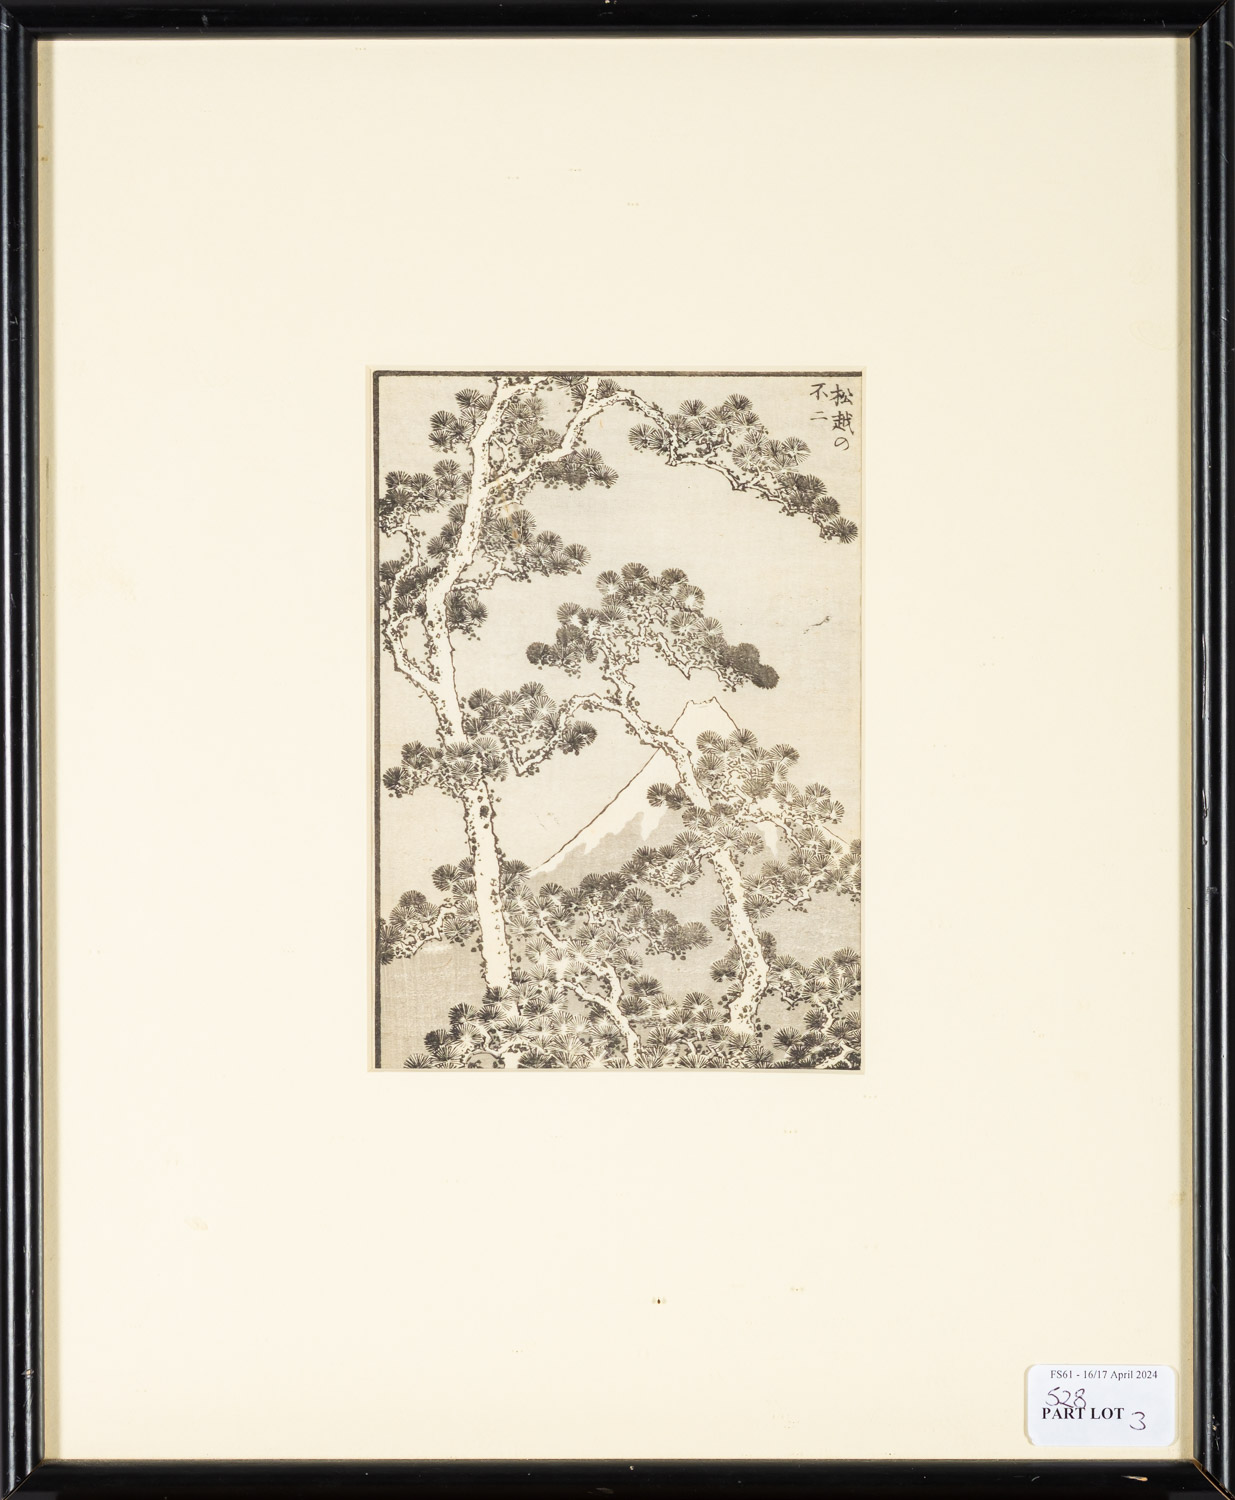 Katsushika Hokusai, three woodblock prints from the Hundred Views of Mount Fuji, 18 x 13cm. - Image 3 of 4